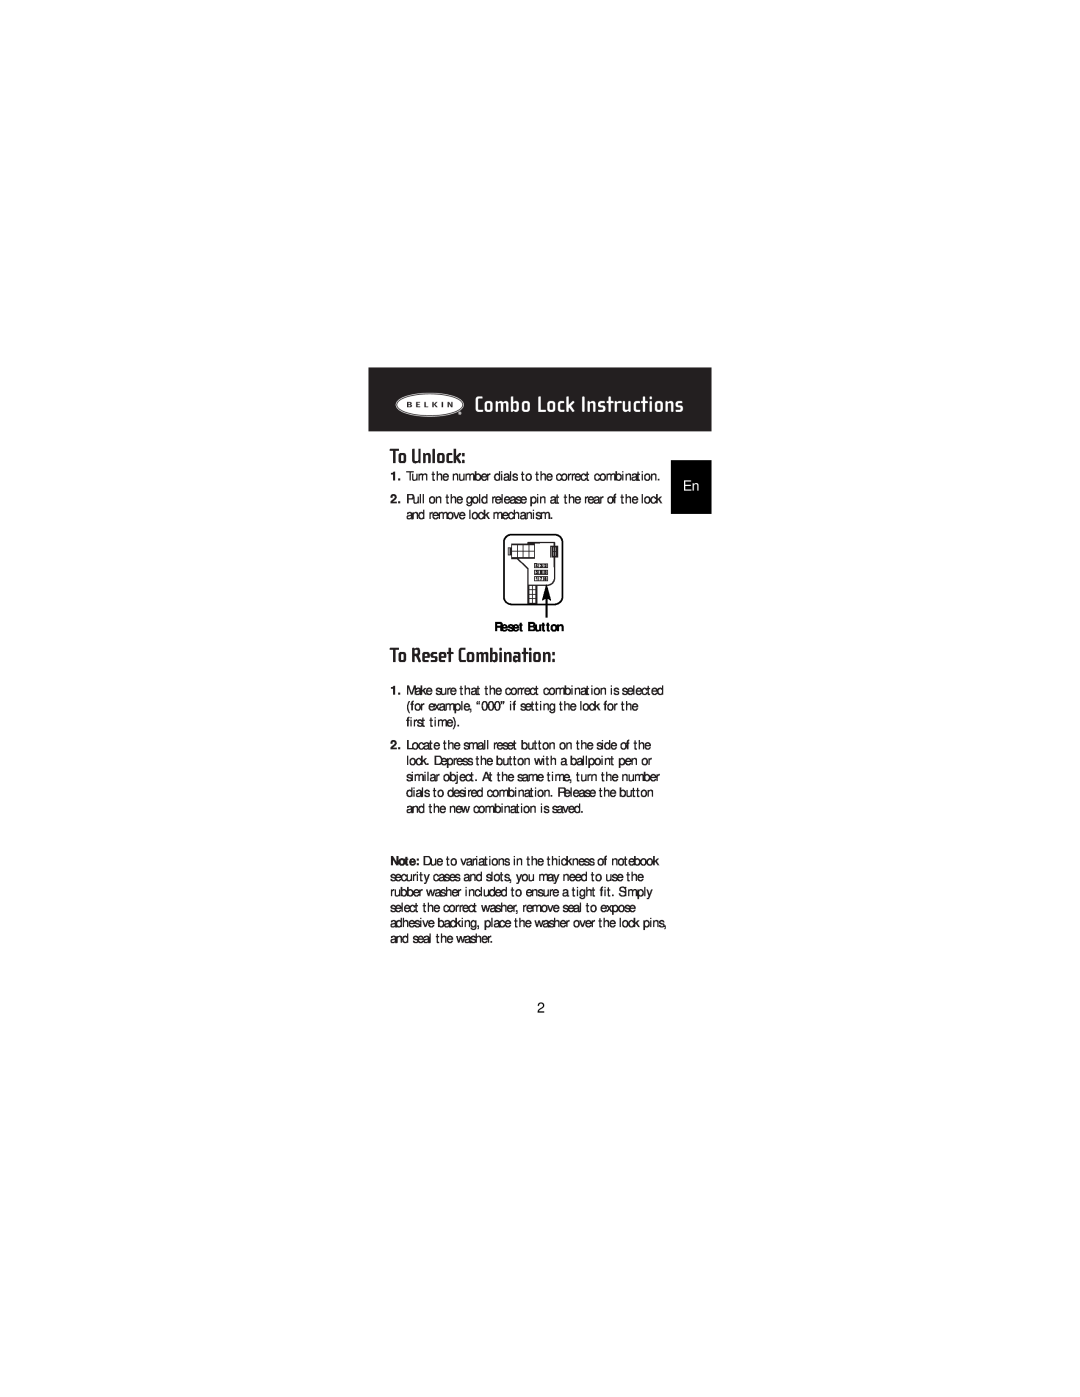 Belkin P74101tt, F8E503 manual To Unlock, To Reset Combination, Reset Button, Combo Lock Instructions 